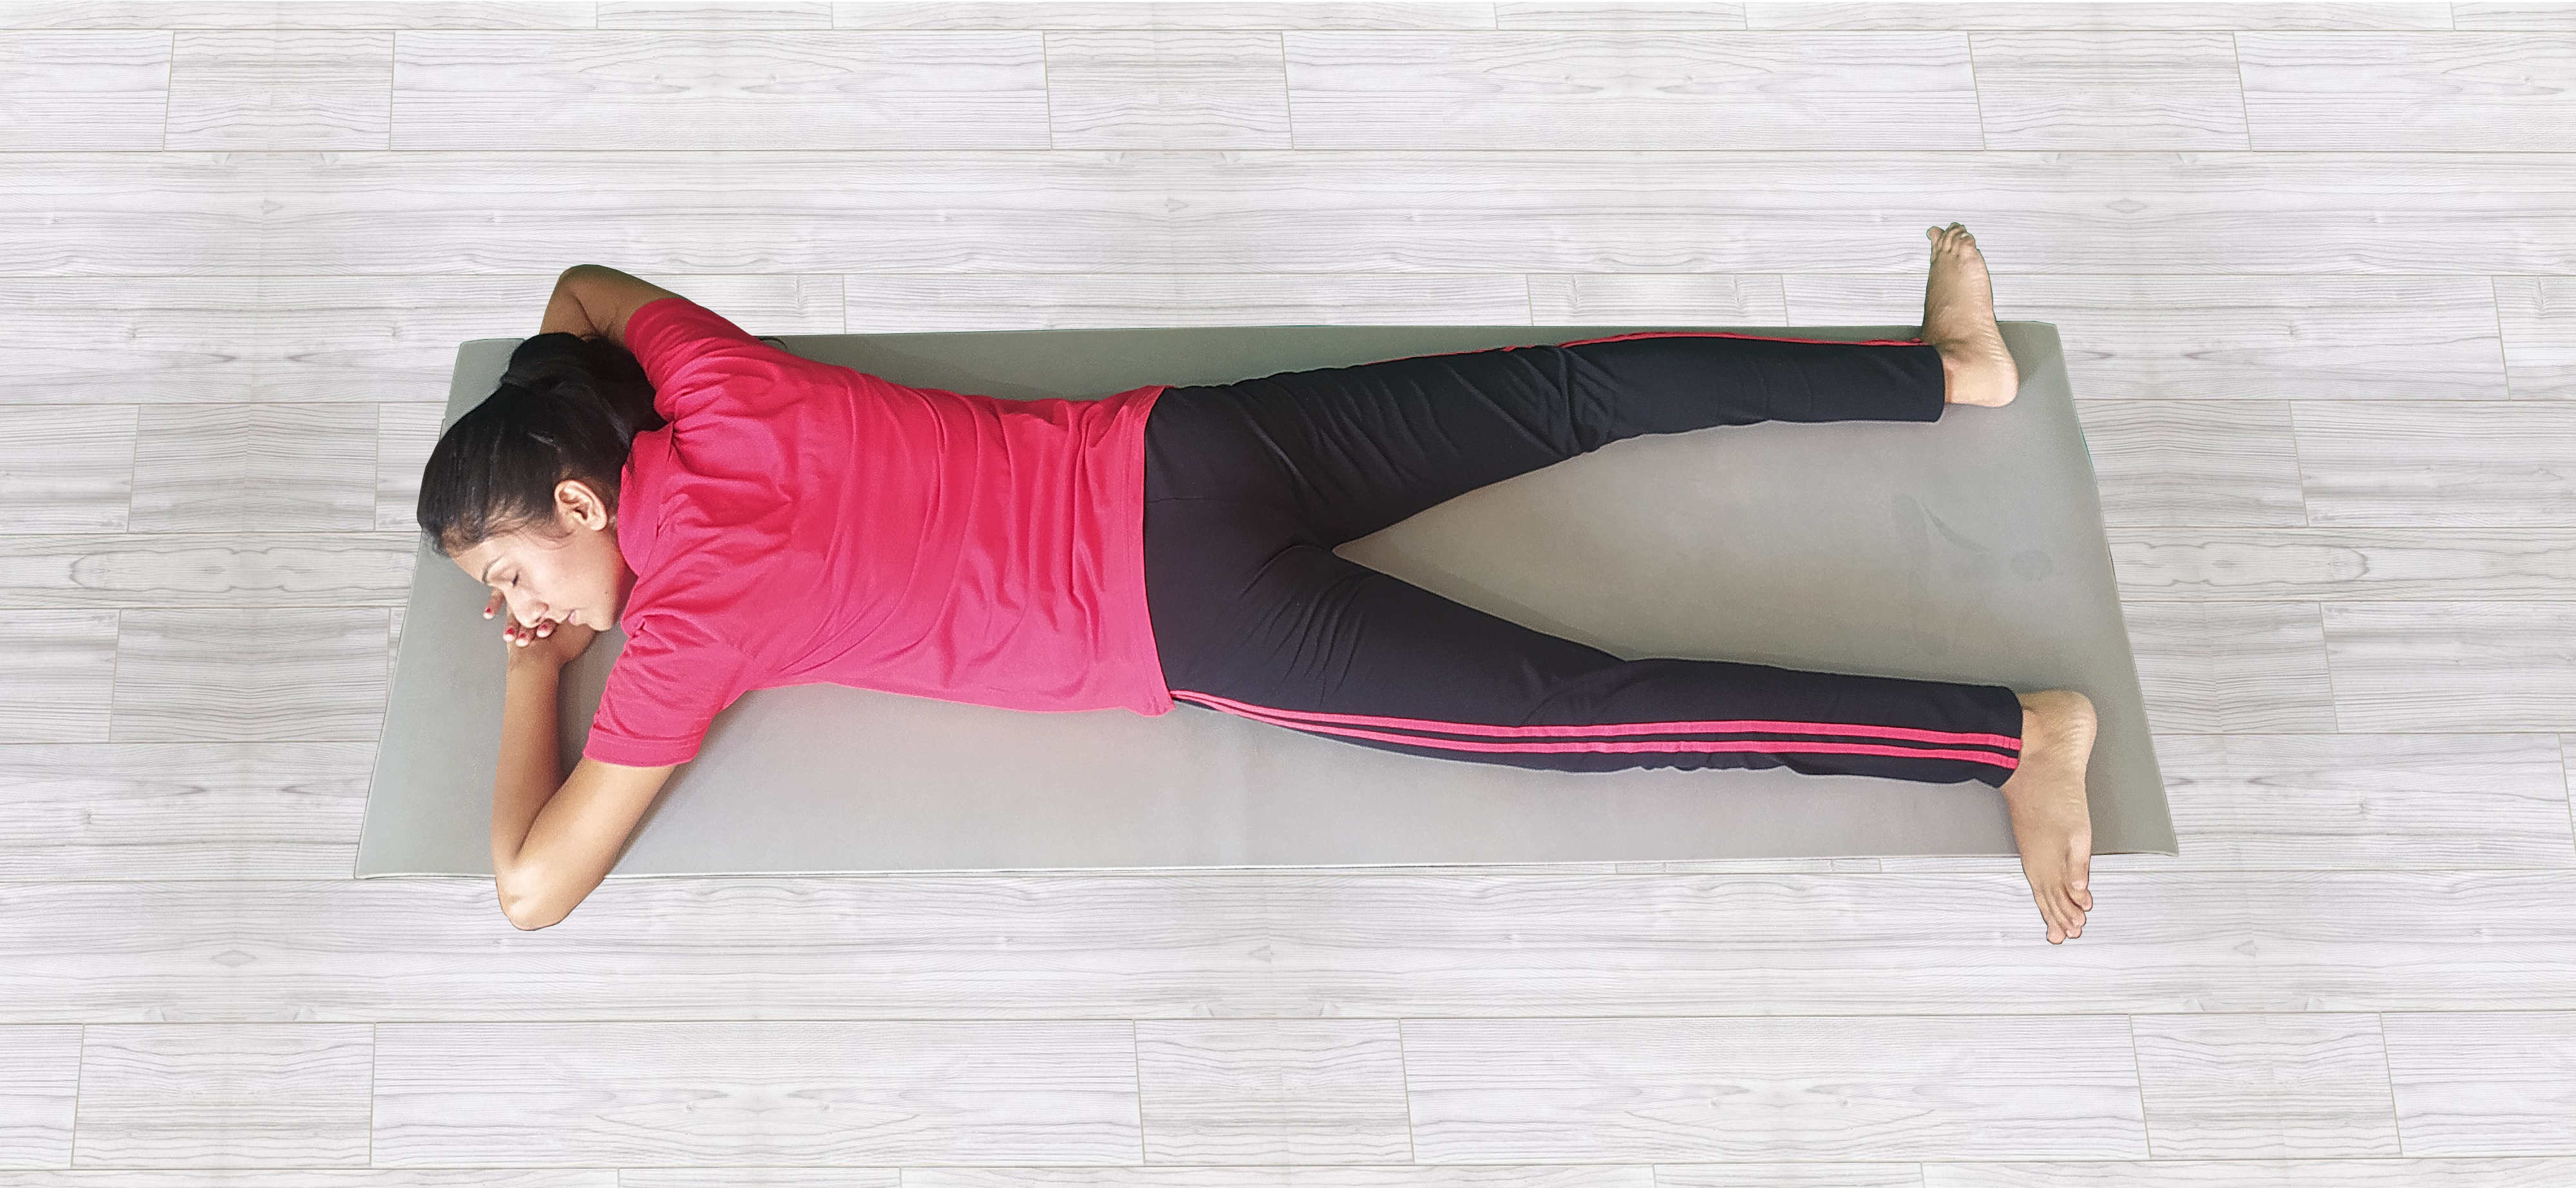 Benefits Of Makarasana: Improve Flexibility And Reduce Back Pain